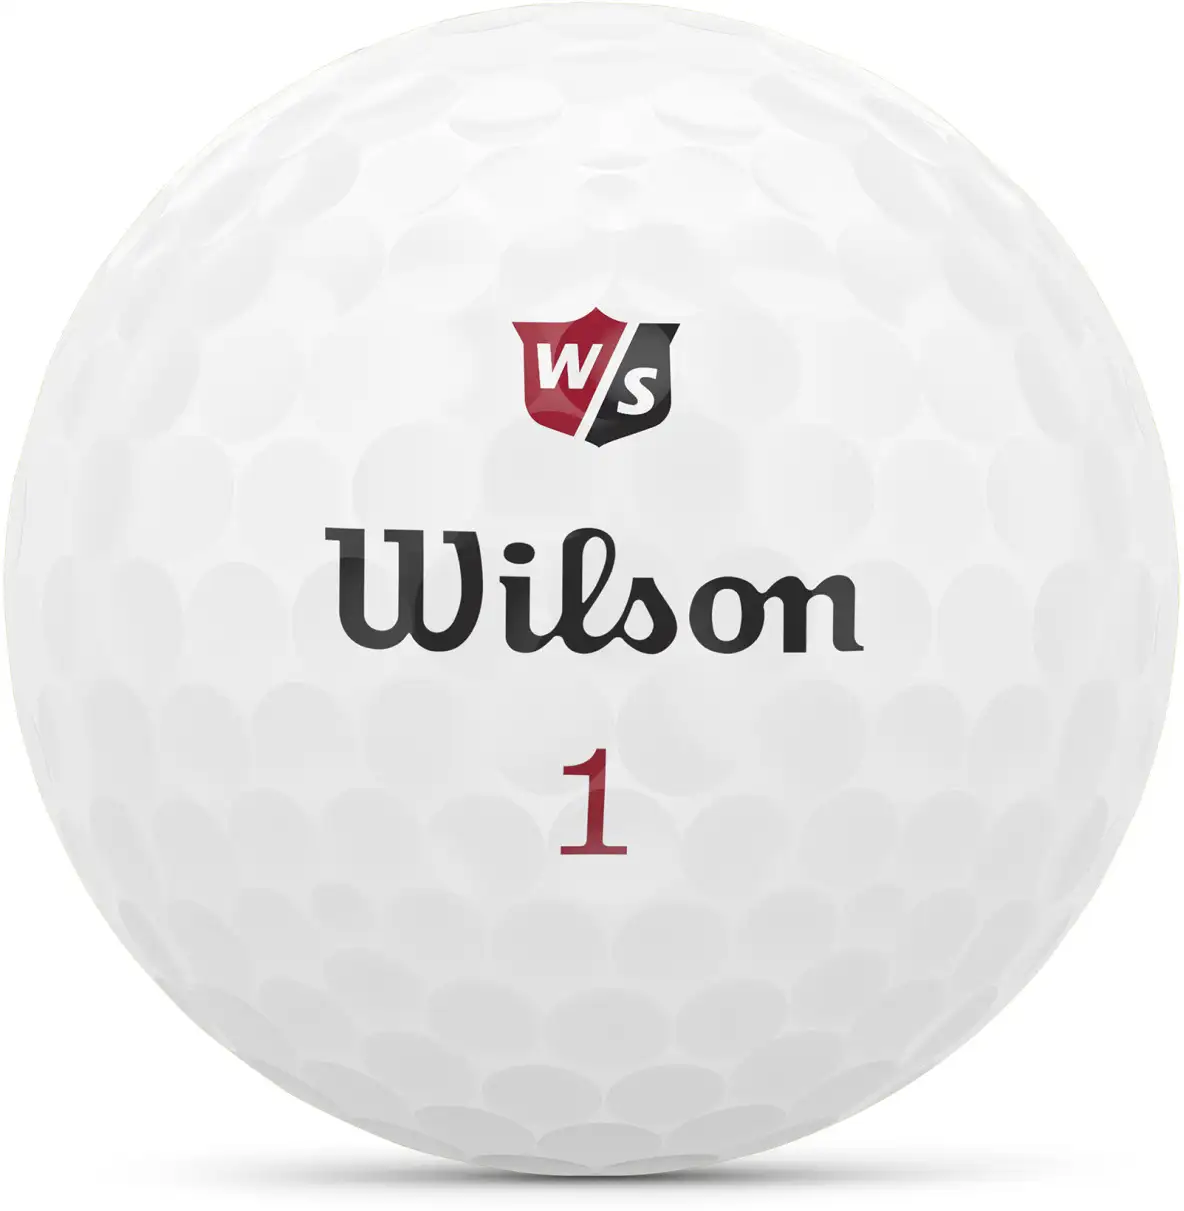 Wilson DUO Soft+ Golfbälle, white